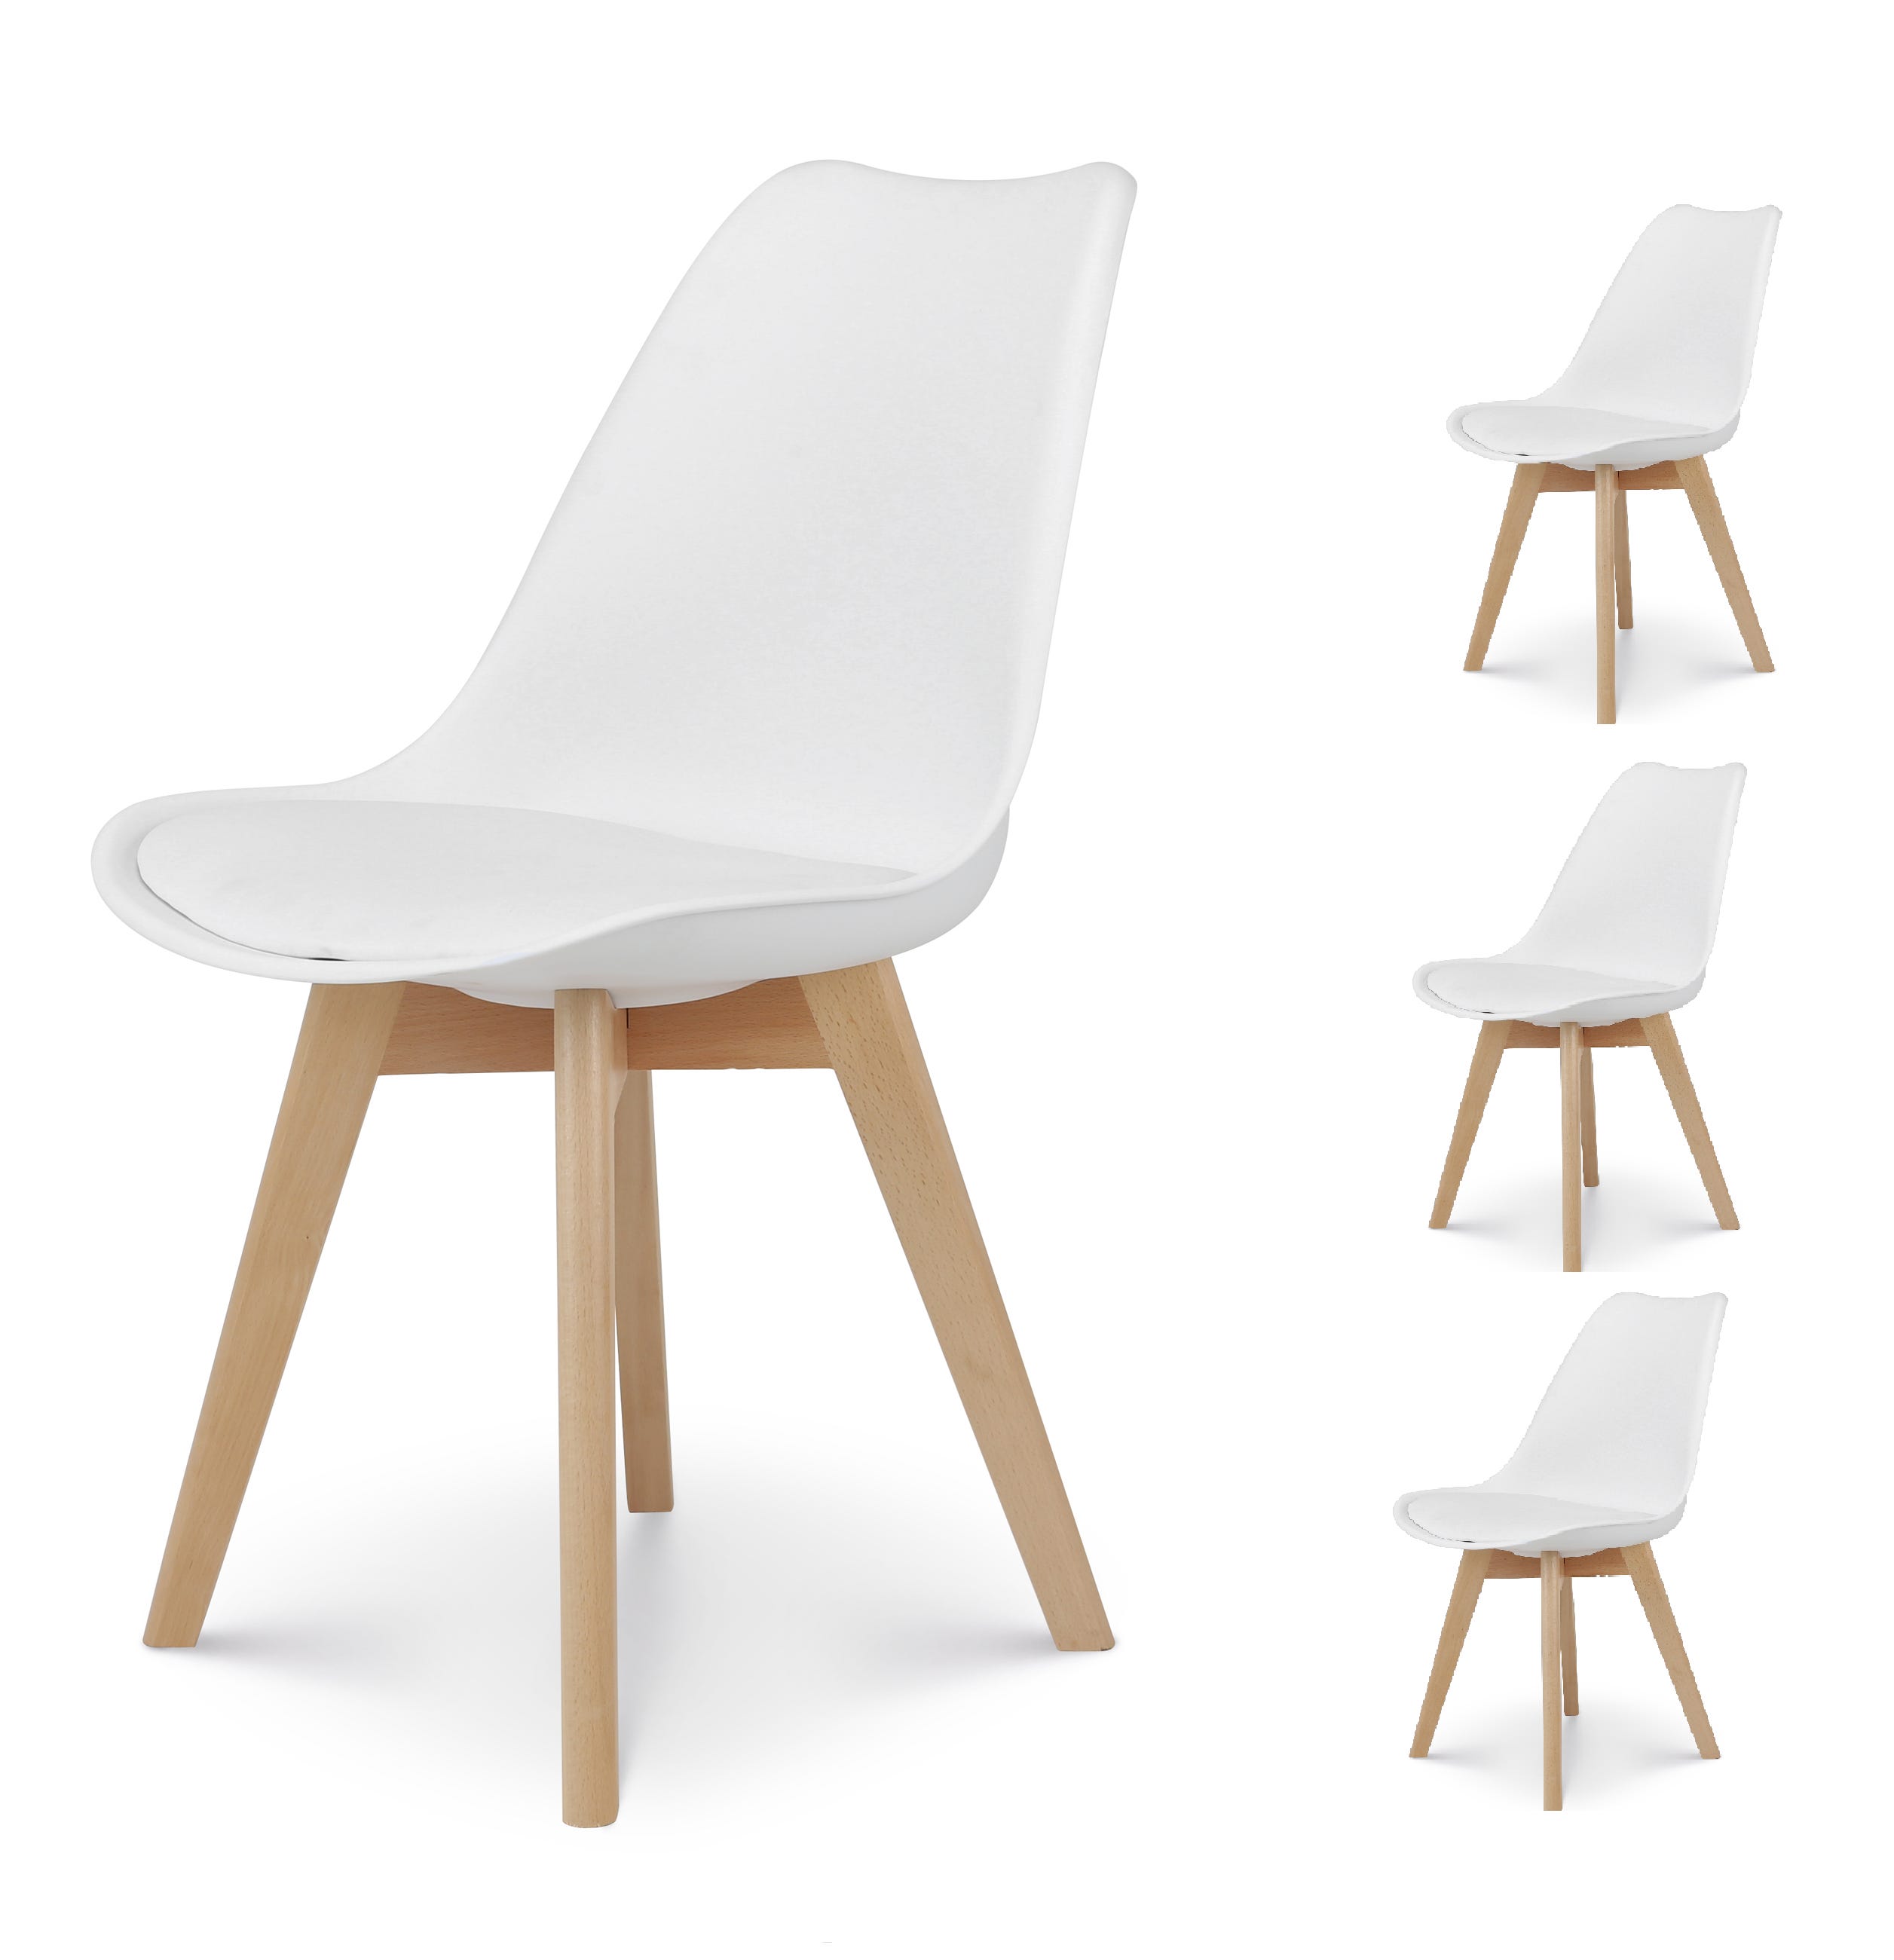 KOSMI - Set di 4 sedie bianche in stile scandinavo, modello VICTORY, con  scocca imbottita in resina bianca e gambe in legno naturale